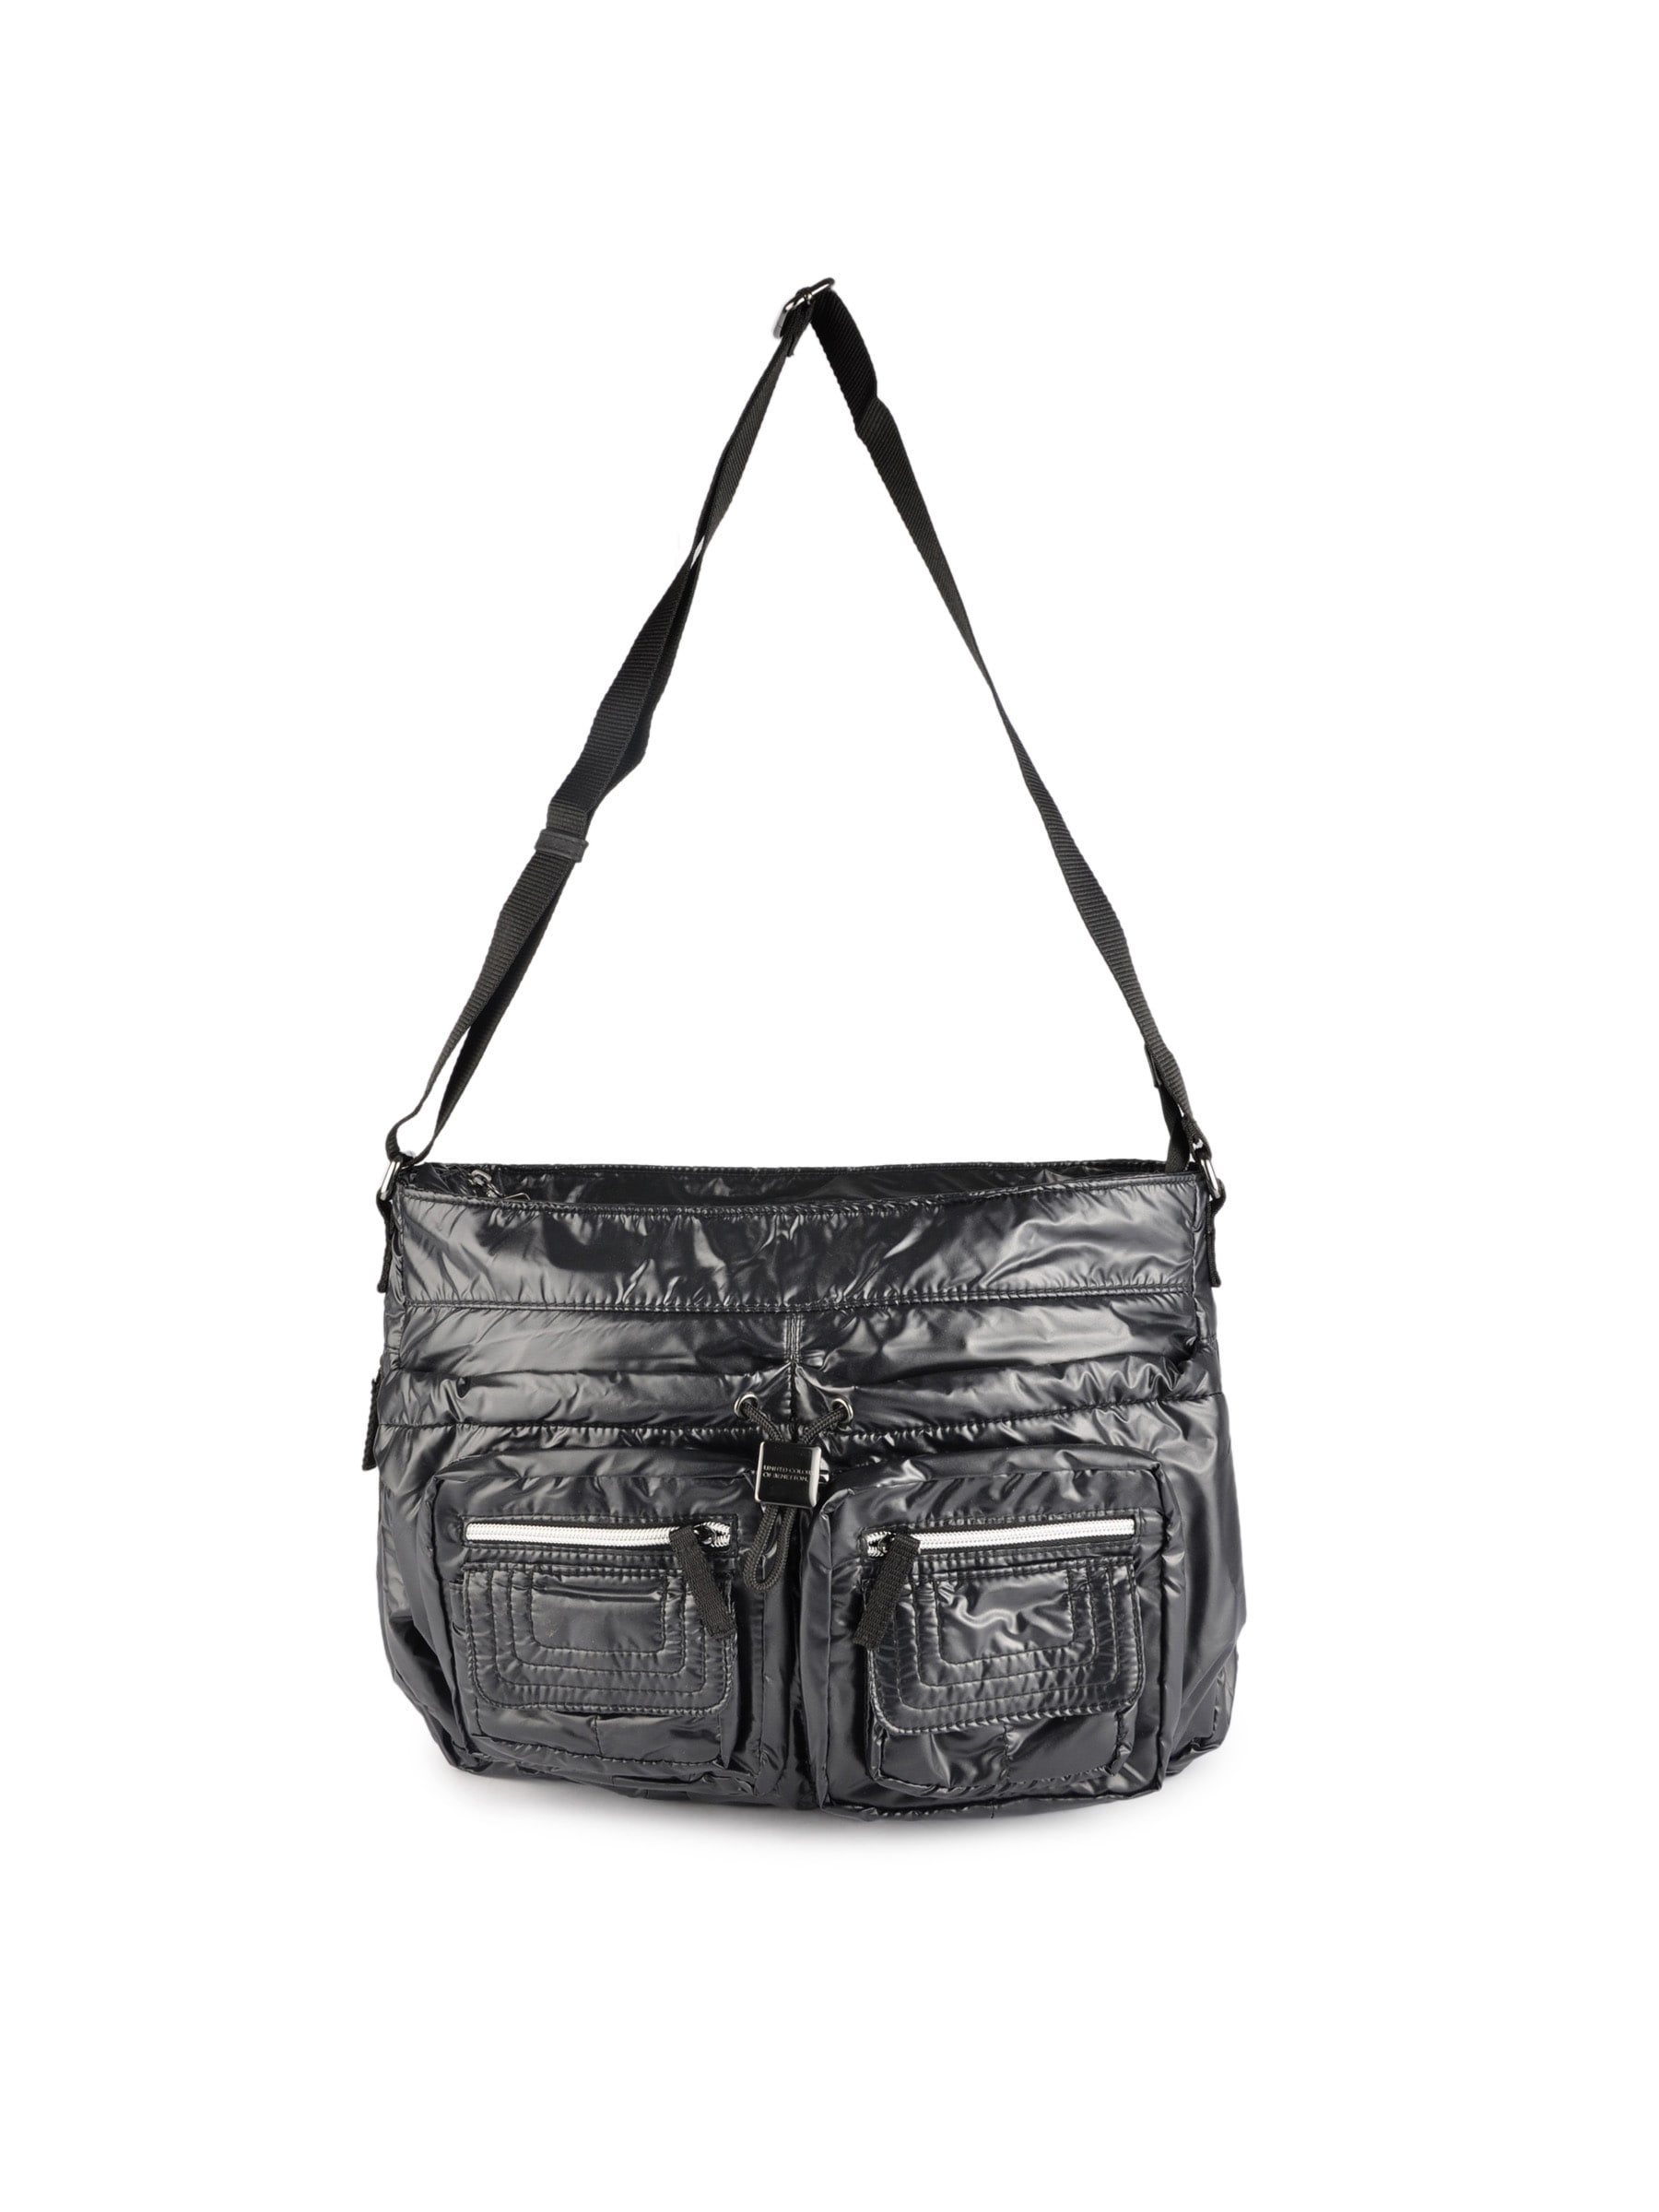 United Colors of Benetton Women Solid Black Handbags